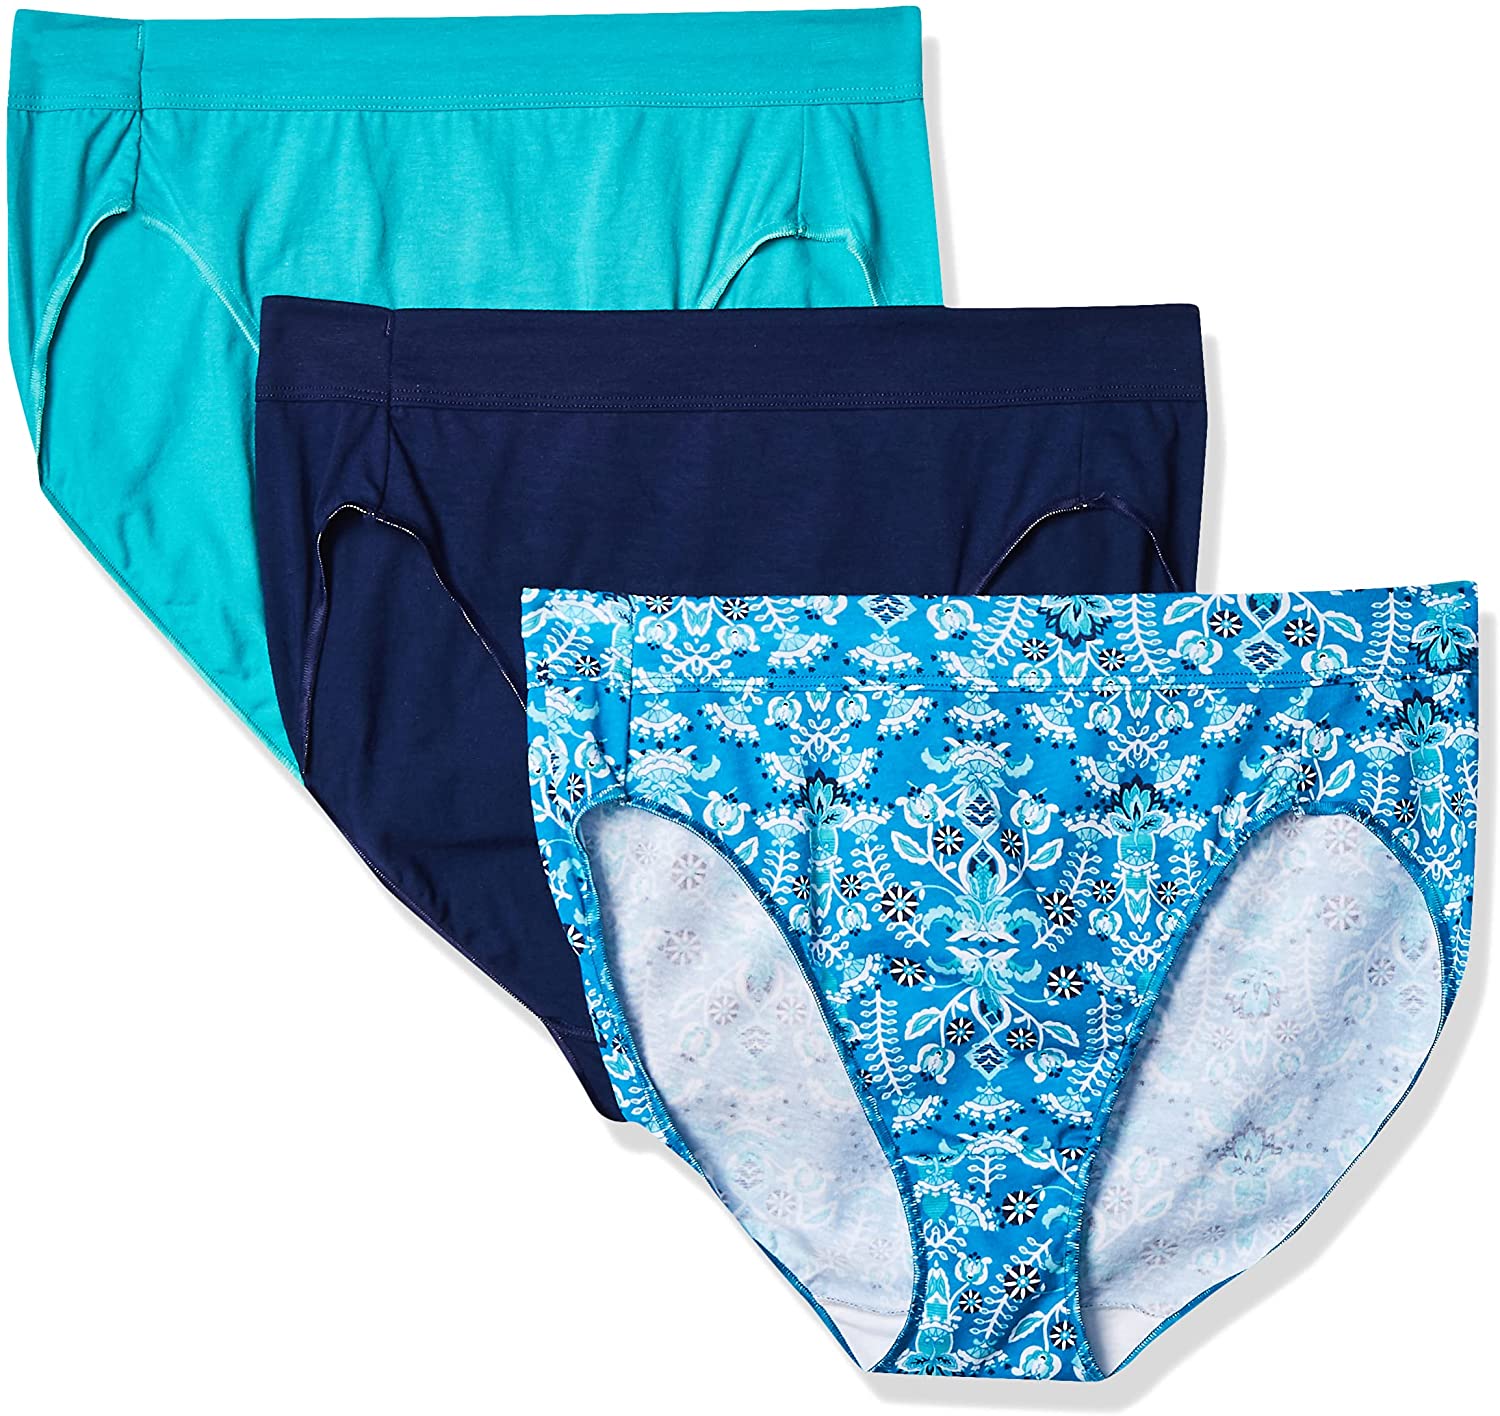 Hanes Ultimate Women's 3-Pack X-Temp Hipster Panties